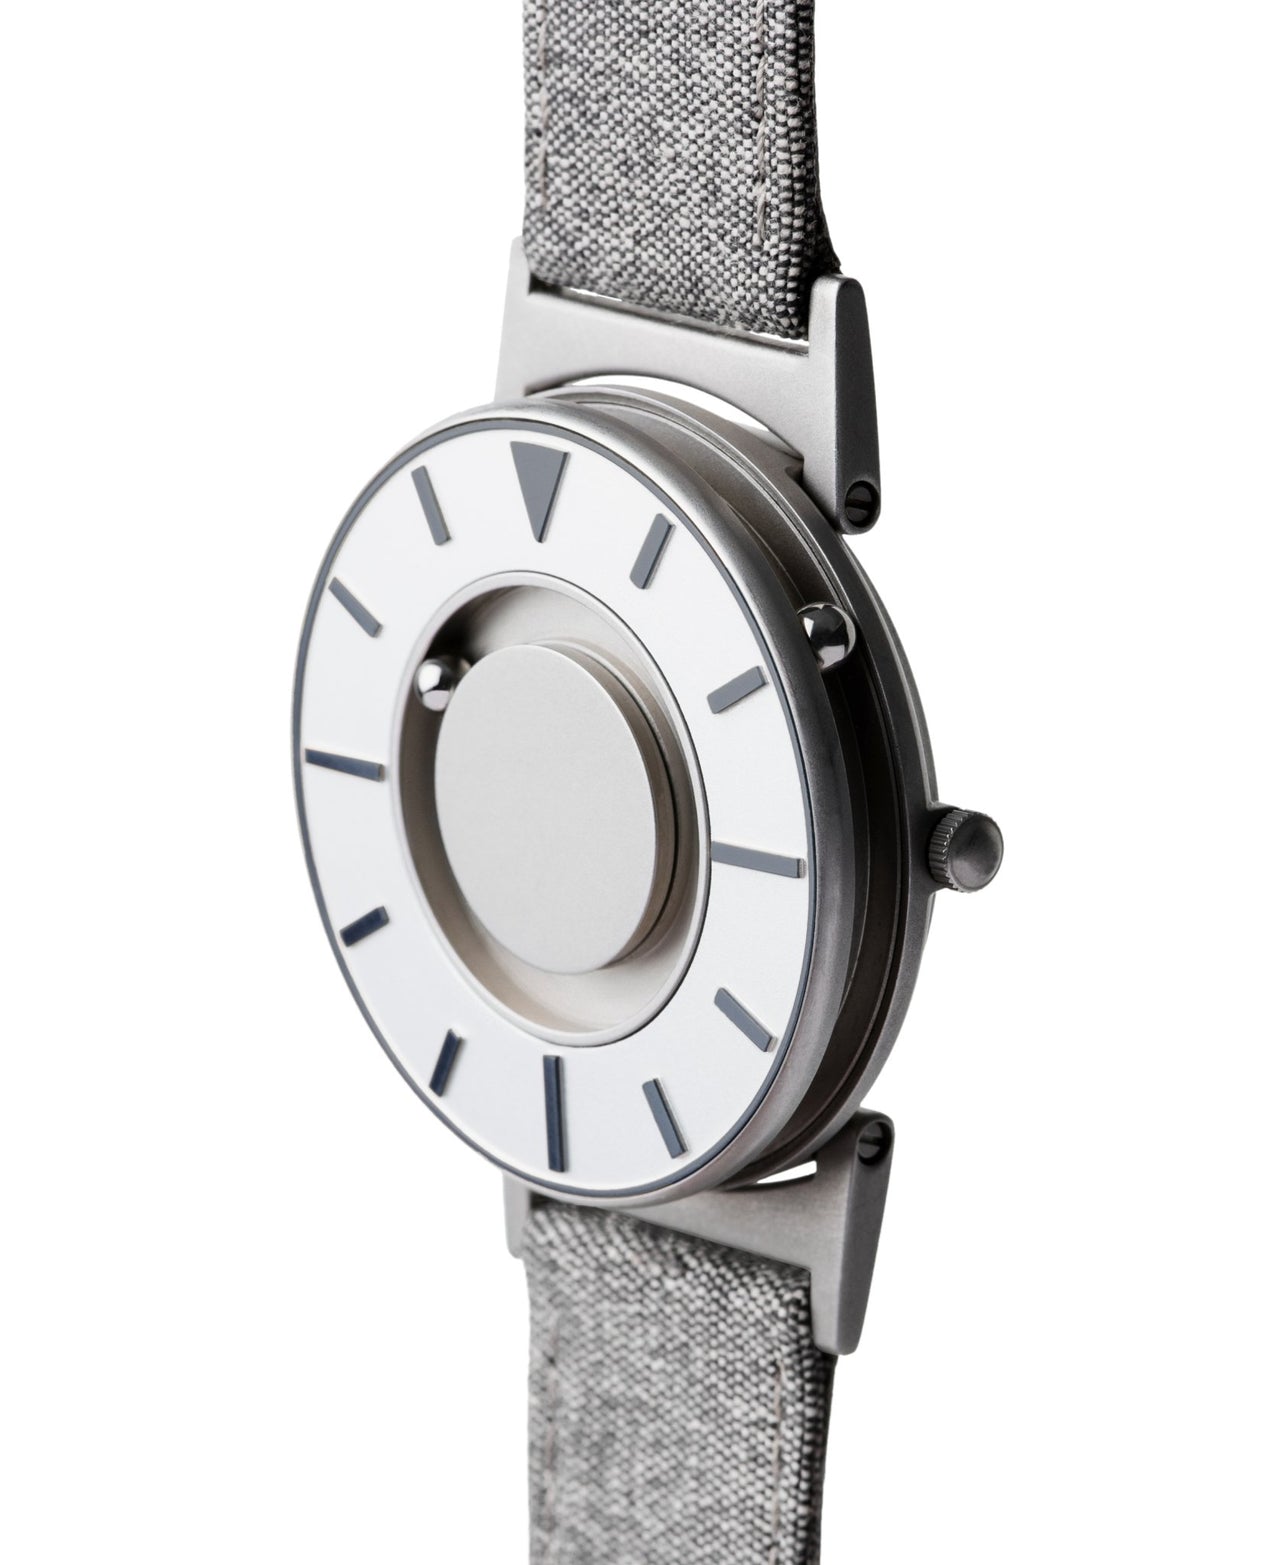 Eone Bradley Compass Graphite - Watches & Crystals